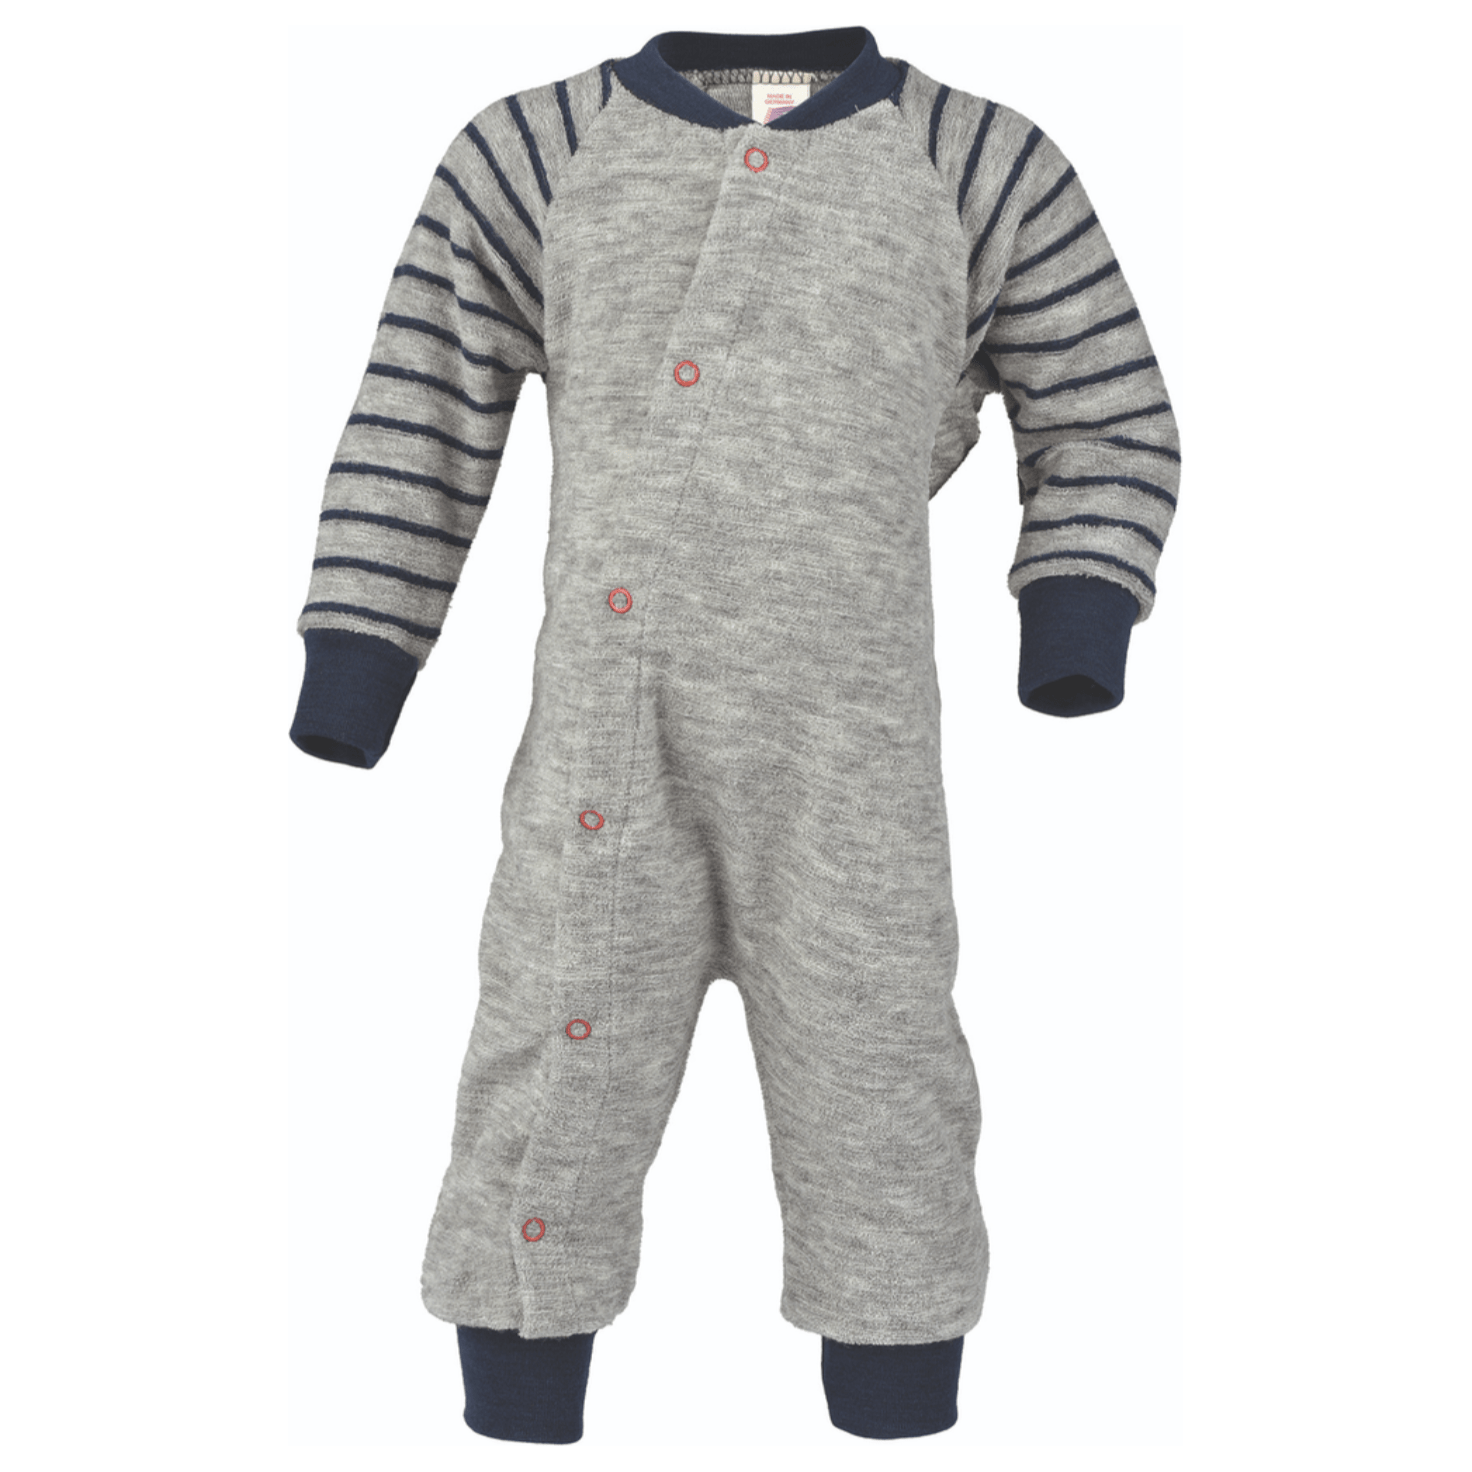 Engel - Organic Merino Terry Pajamas without feet (3 months - 5 years)